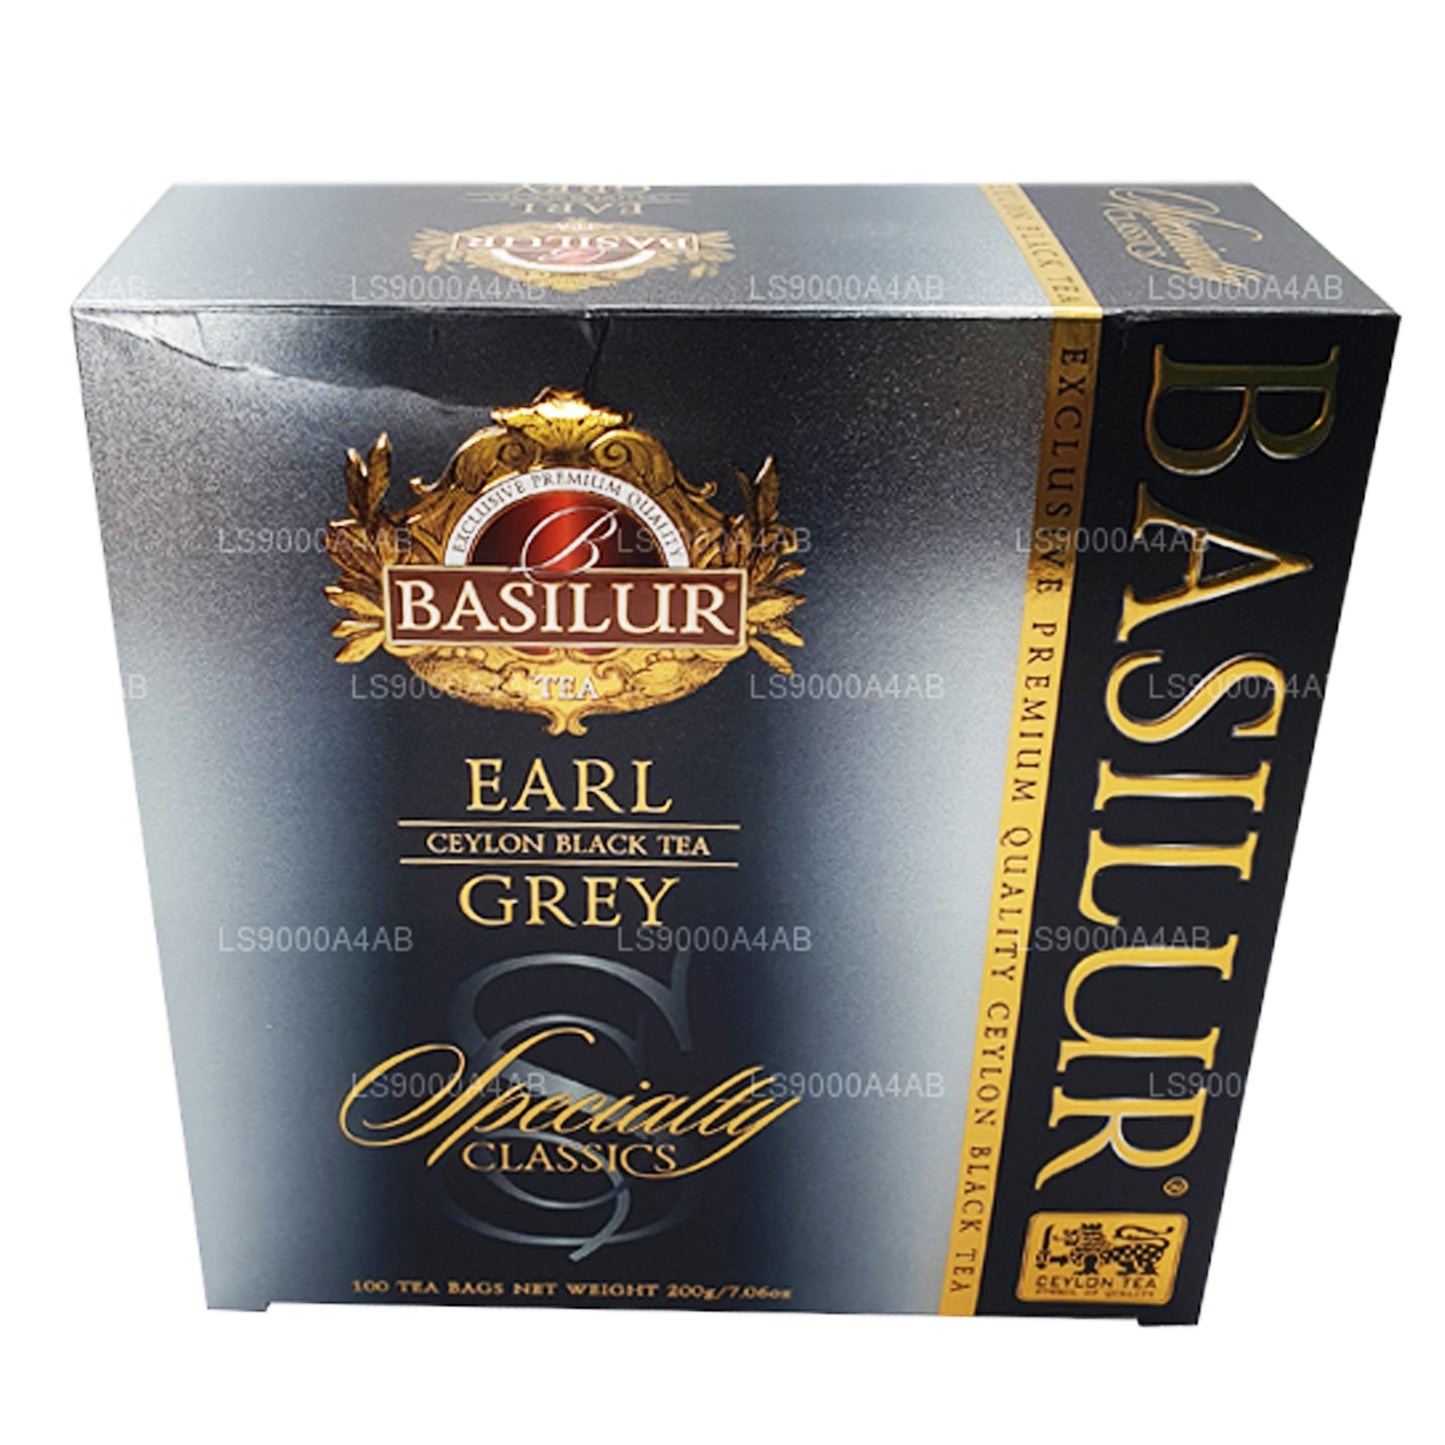 Basilur Speciality Classics Earl Grey Ceylon Black Tea (200g) 100 teekotid